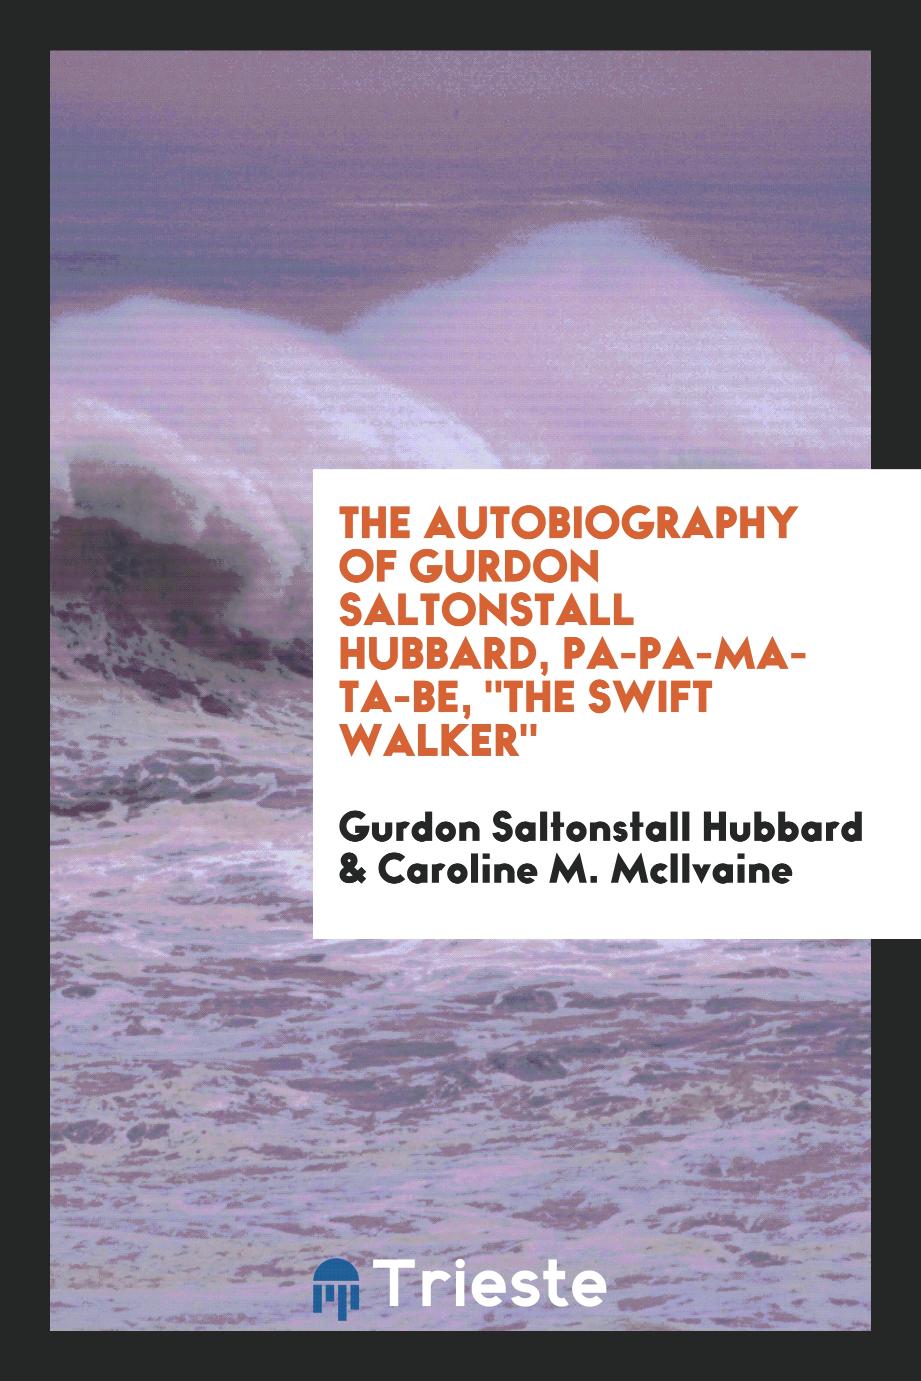 The autobiography of Gurdon Saltonstall Hubbard, Pa-pa-ma-ta-be, "The swift walker"